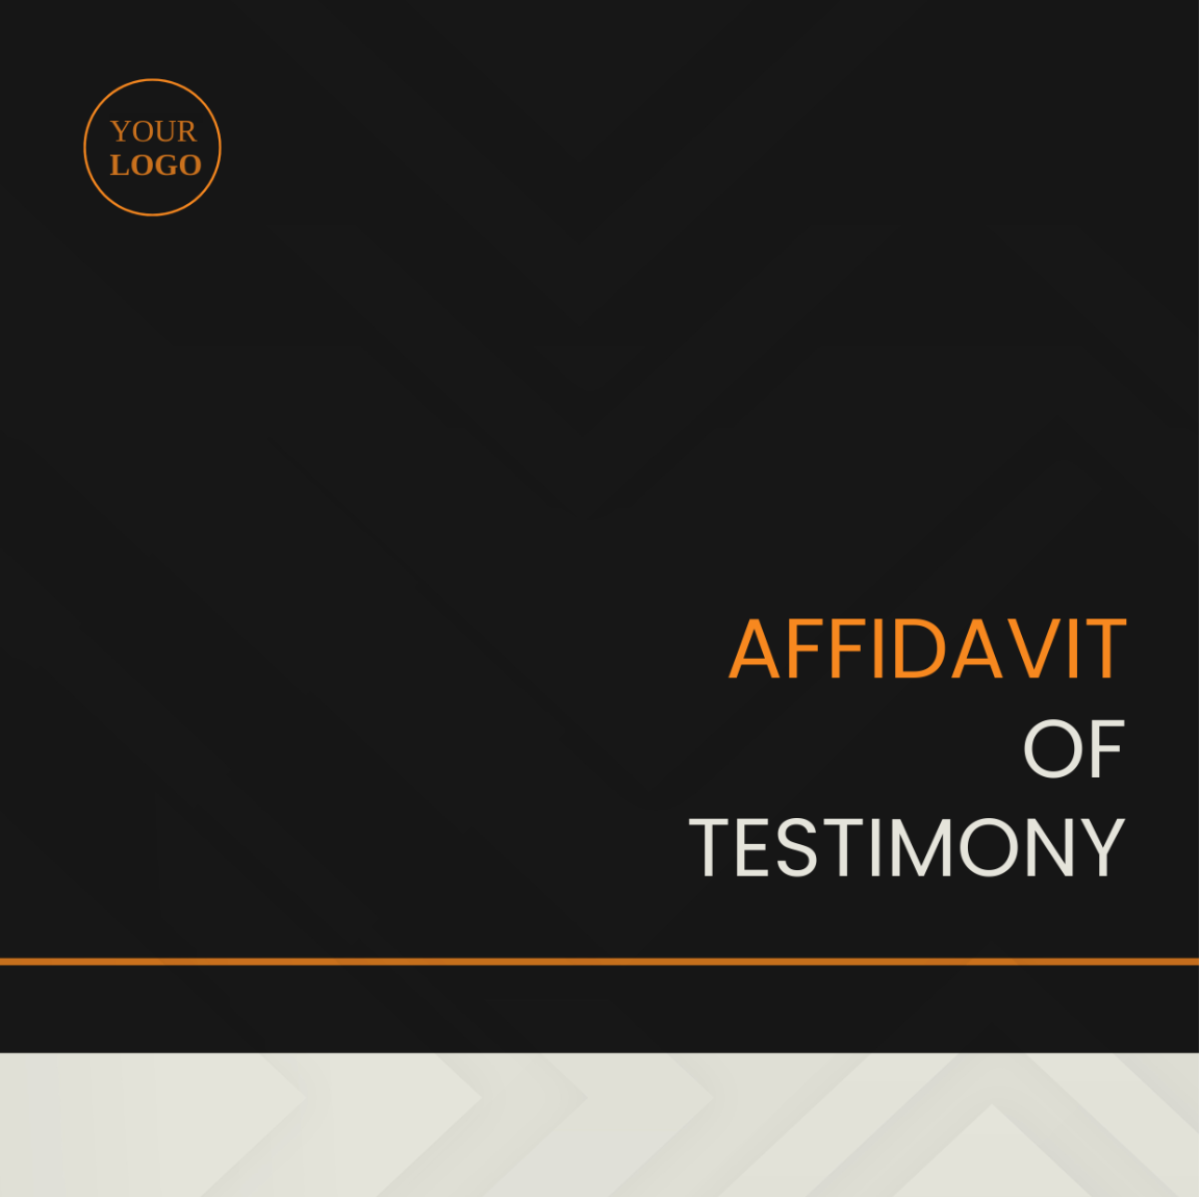 Affidavit of Testimony Template